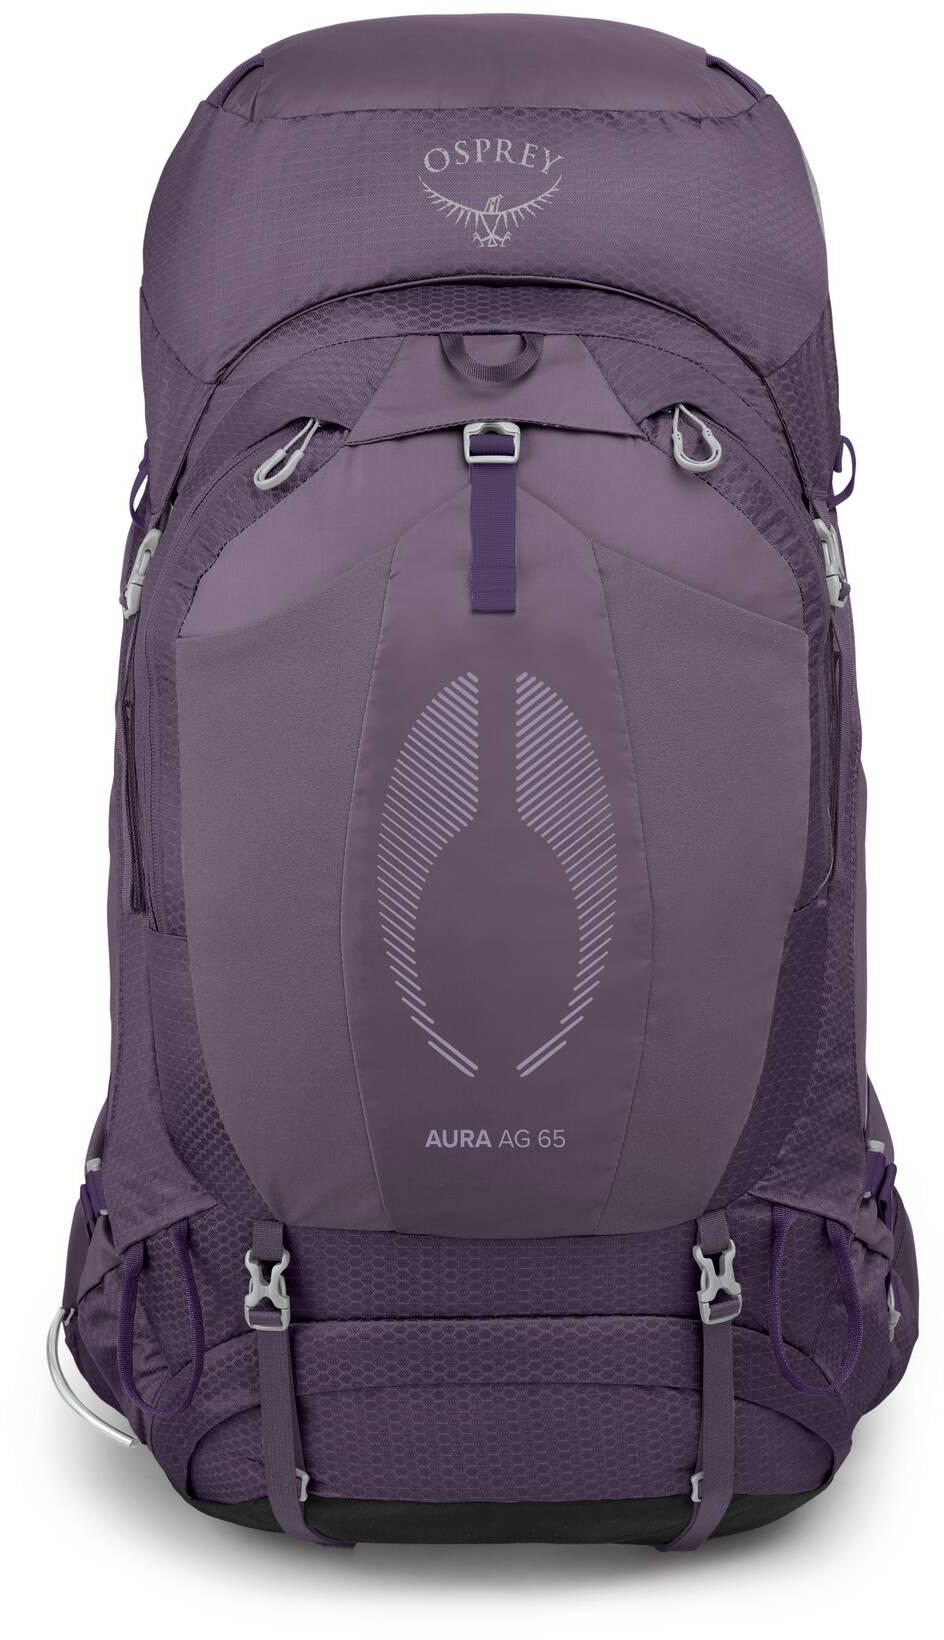 Osprey Aura Ag 65 Hiking Backpack - Enchantment Purple